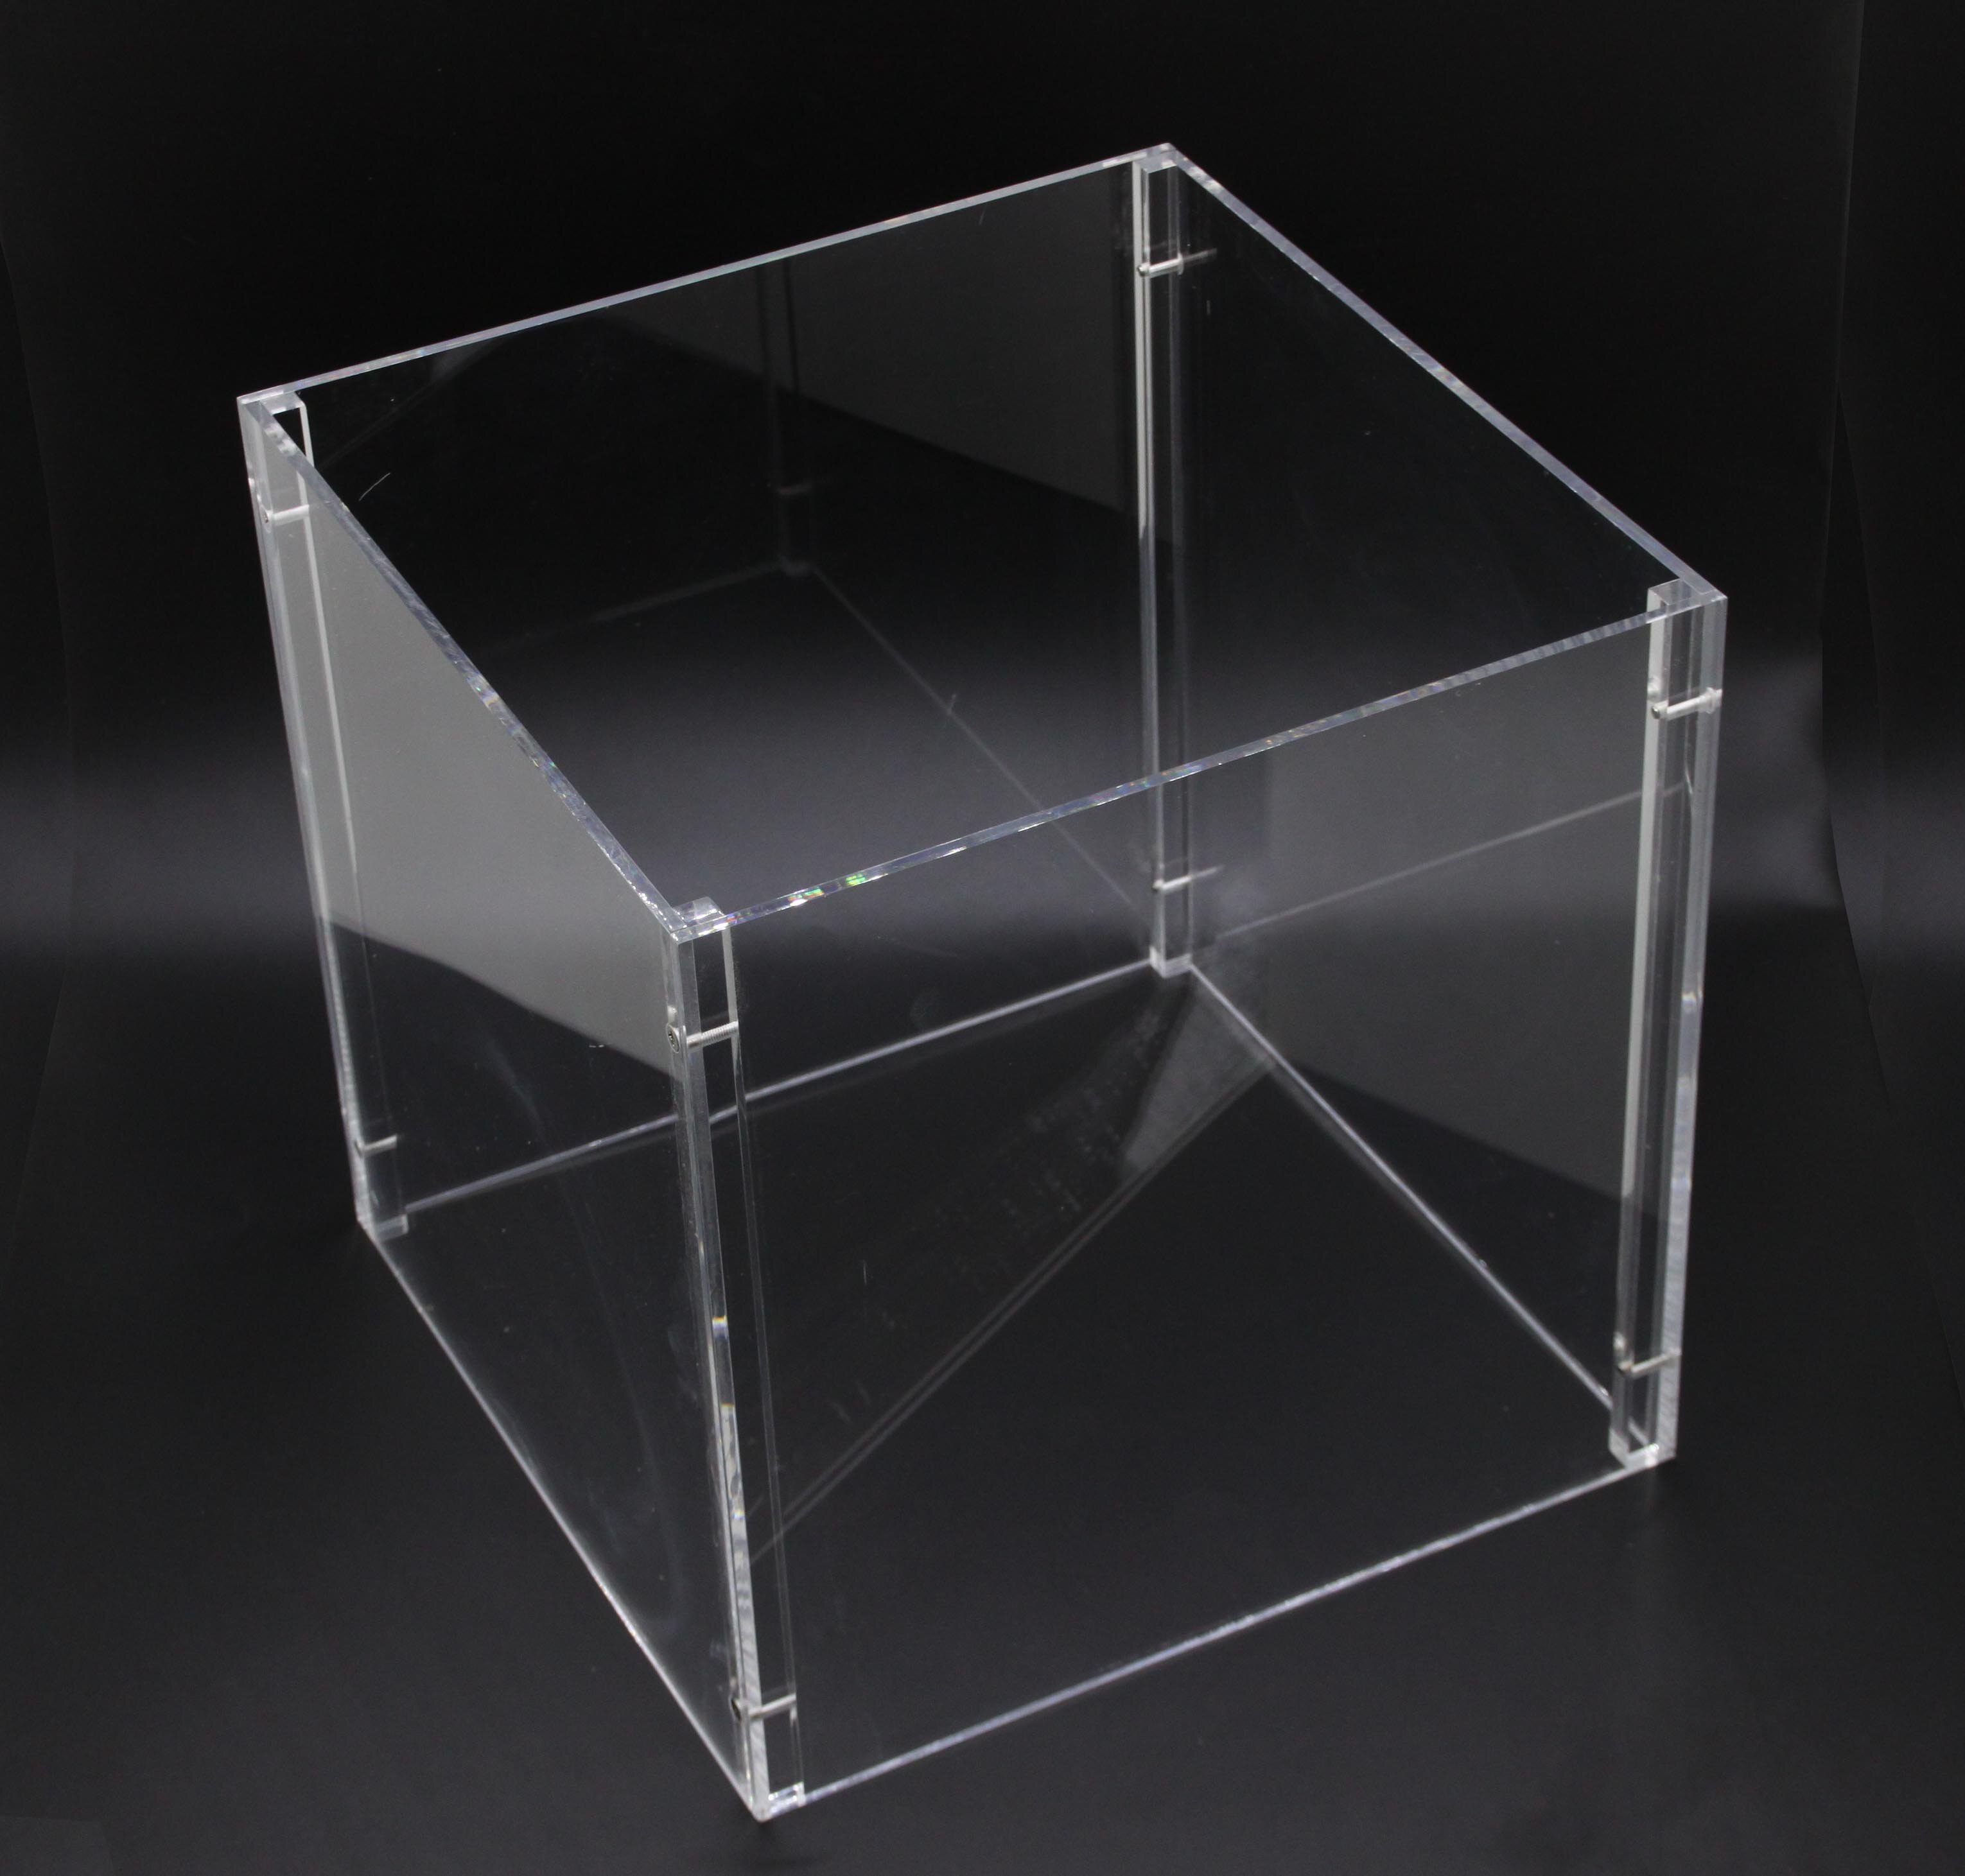 CHOICE ACRYLIC DISPLAYS Acrylic Box Case | 5 Sided Display Box | Museum Box  Case | Square Box | Acrylic Cube 16 H x 16 W x 16 D